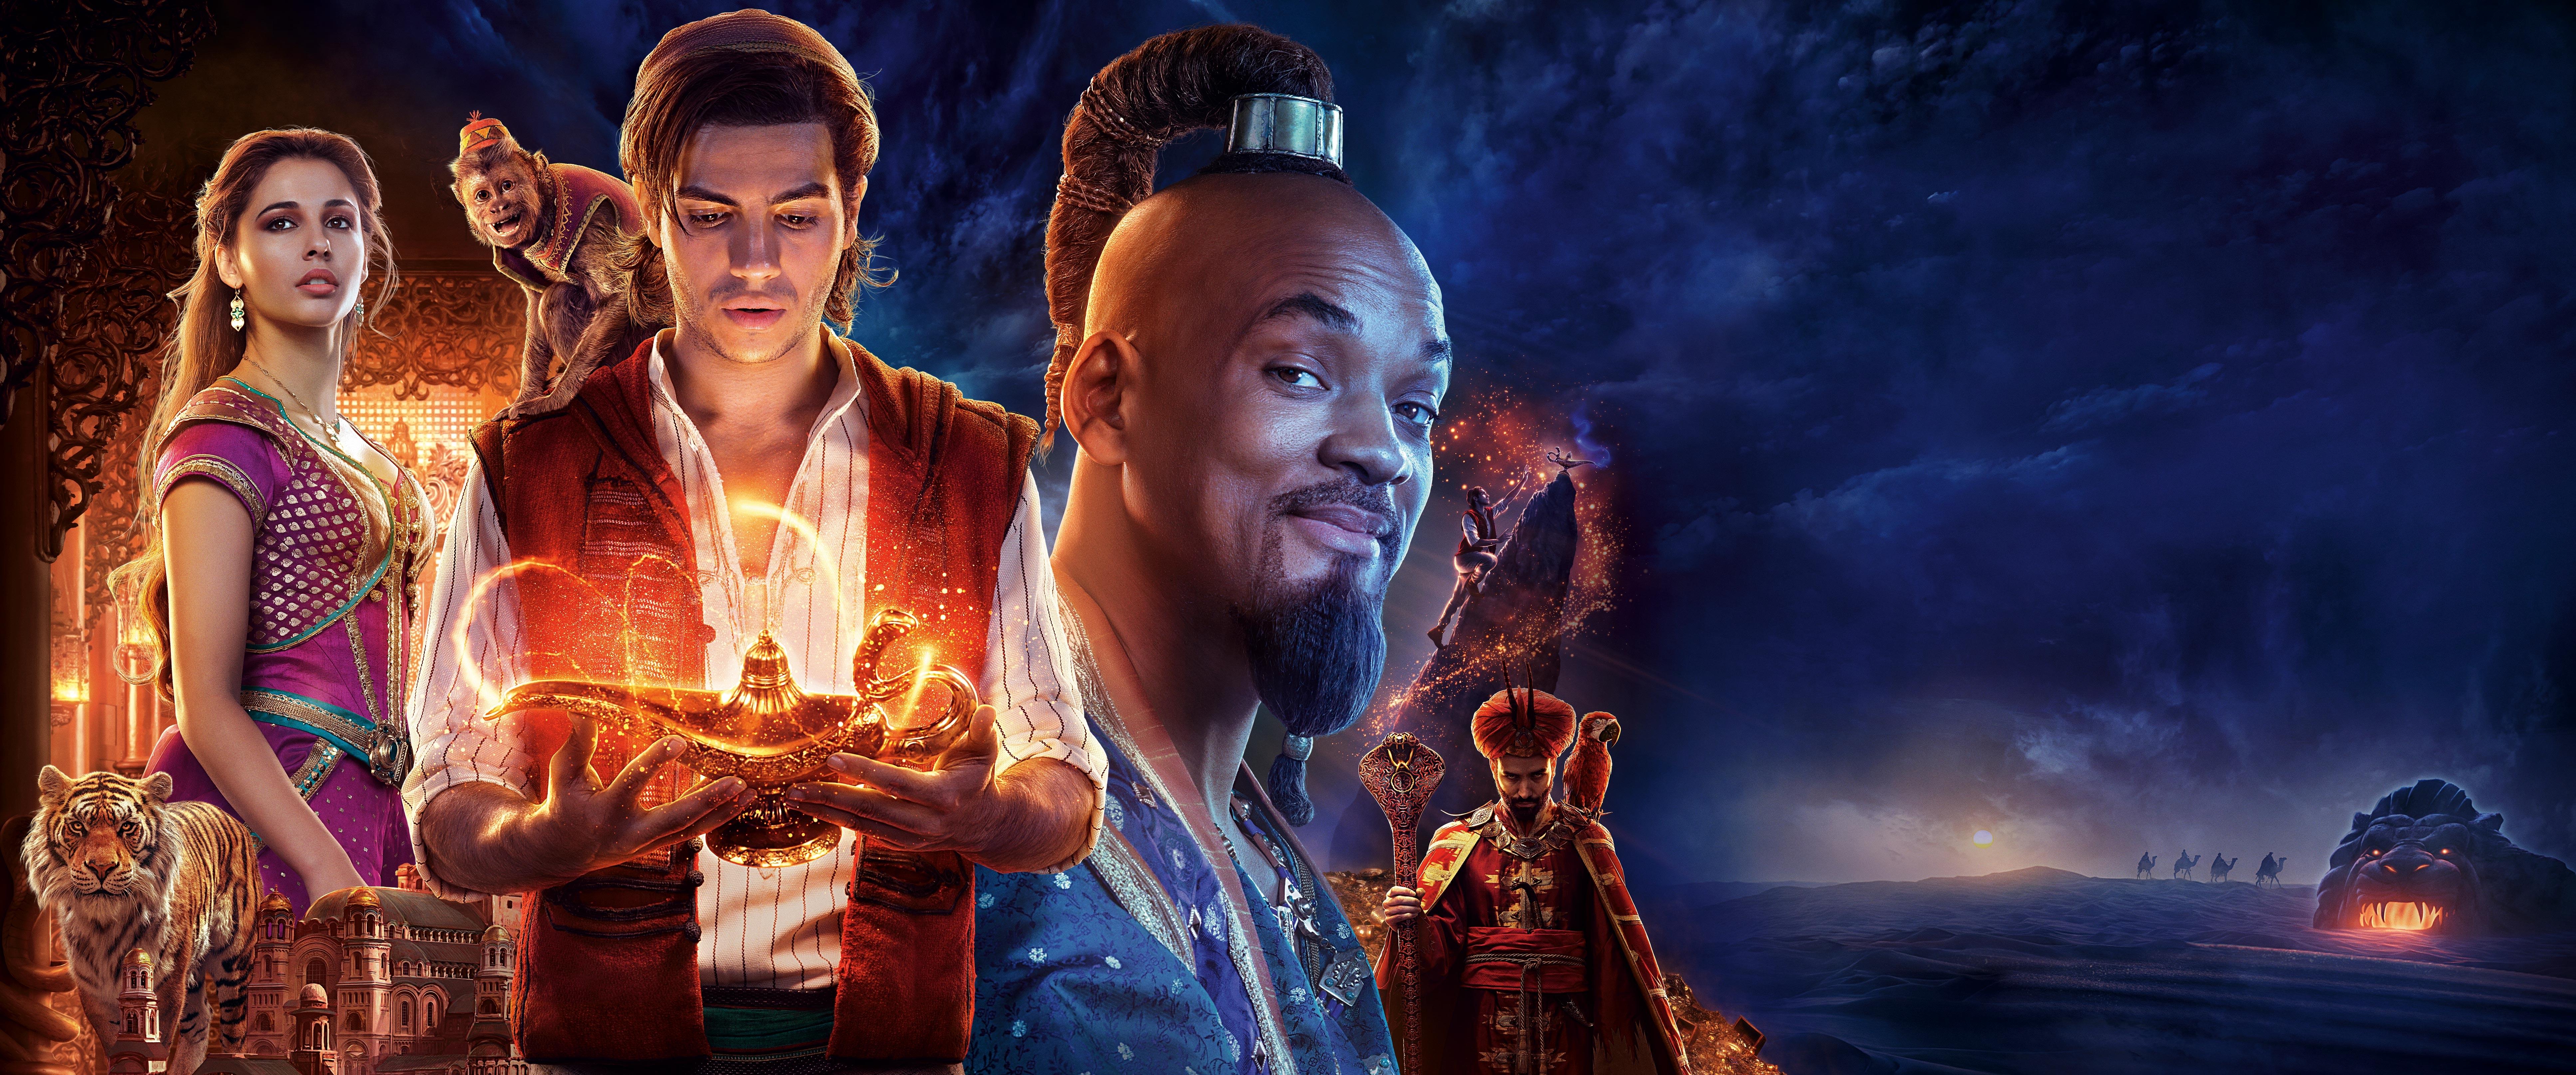 Aladdin Movie 2019 Wallpaper, HD Movies 4K Wallpaper